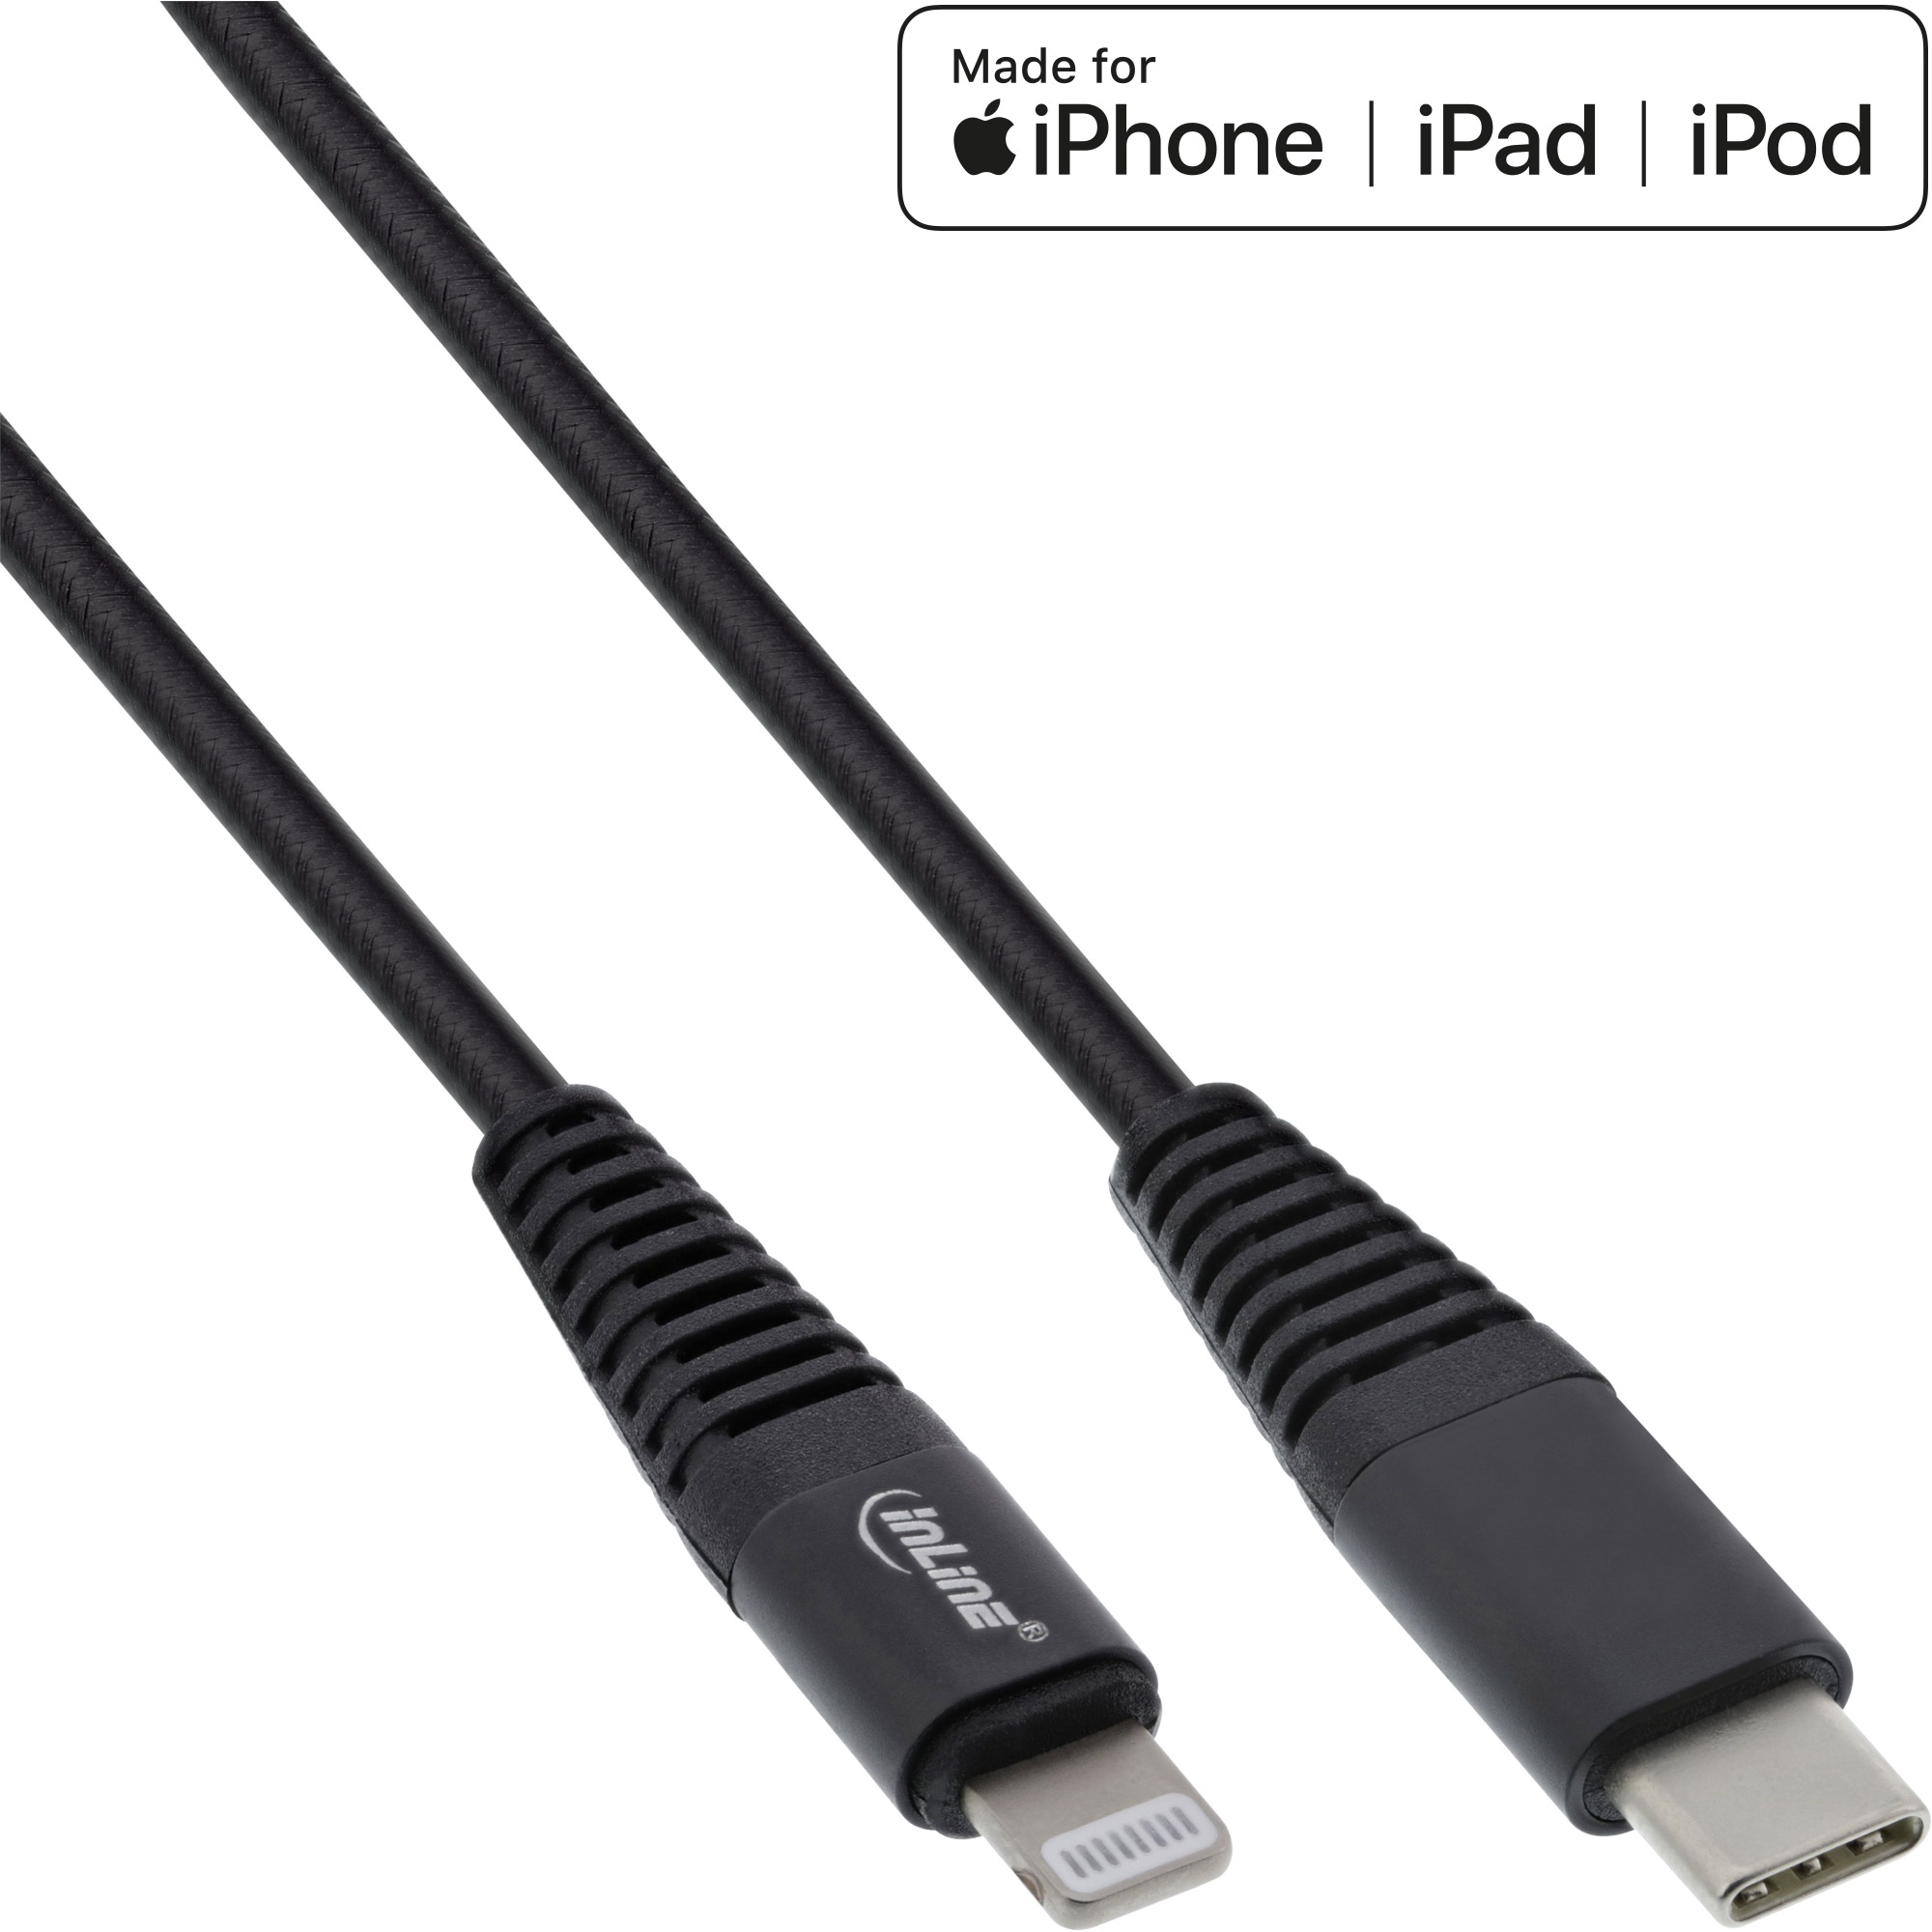 InLine® USB-C Lightning Kabel, für iPad, iPhone, iPod, schwarz/Alu, 1m MFi-zertifiziert